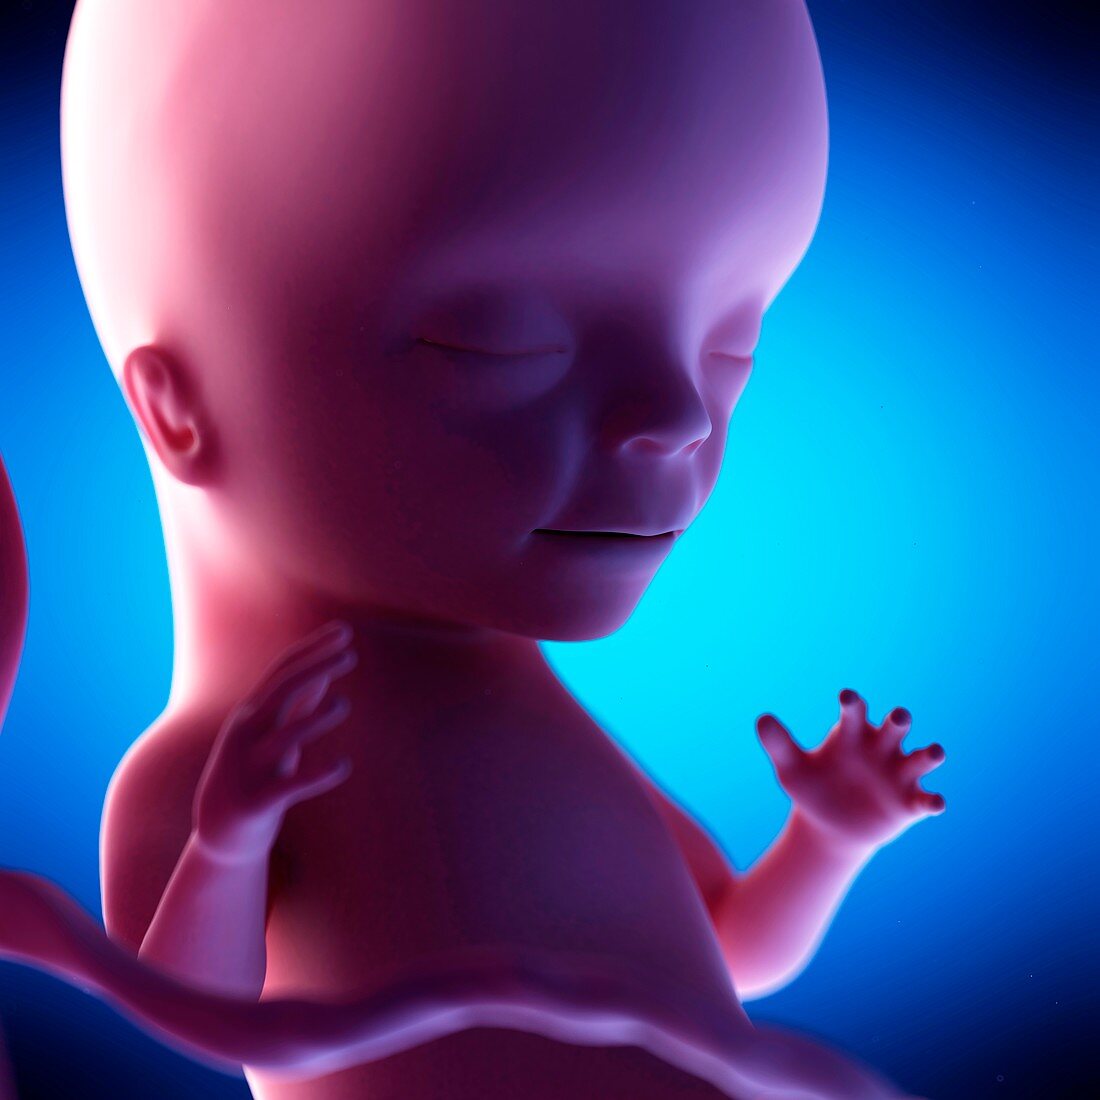 Human fetus at week 15 of gestation, illustration